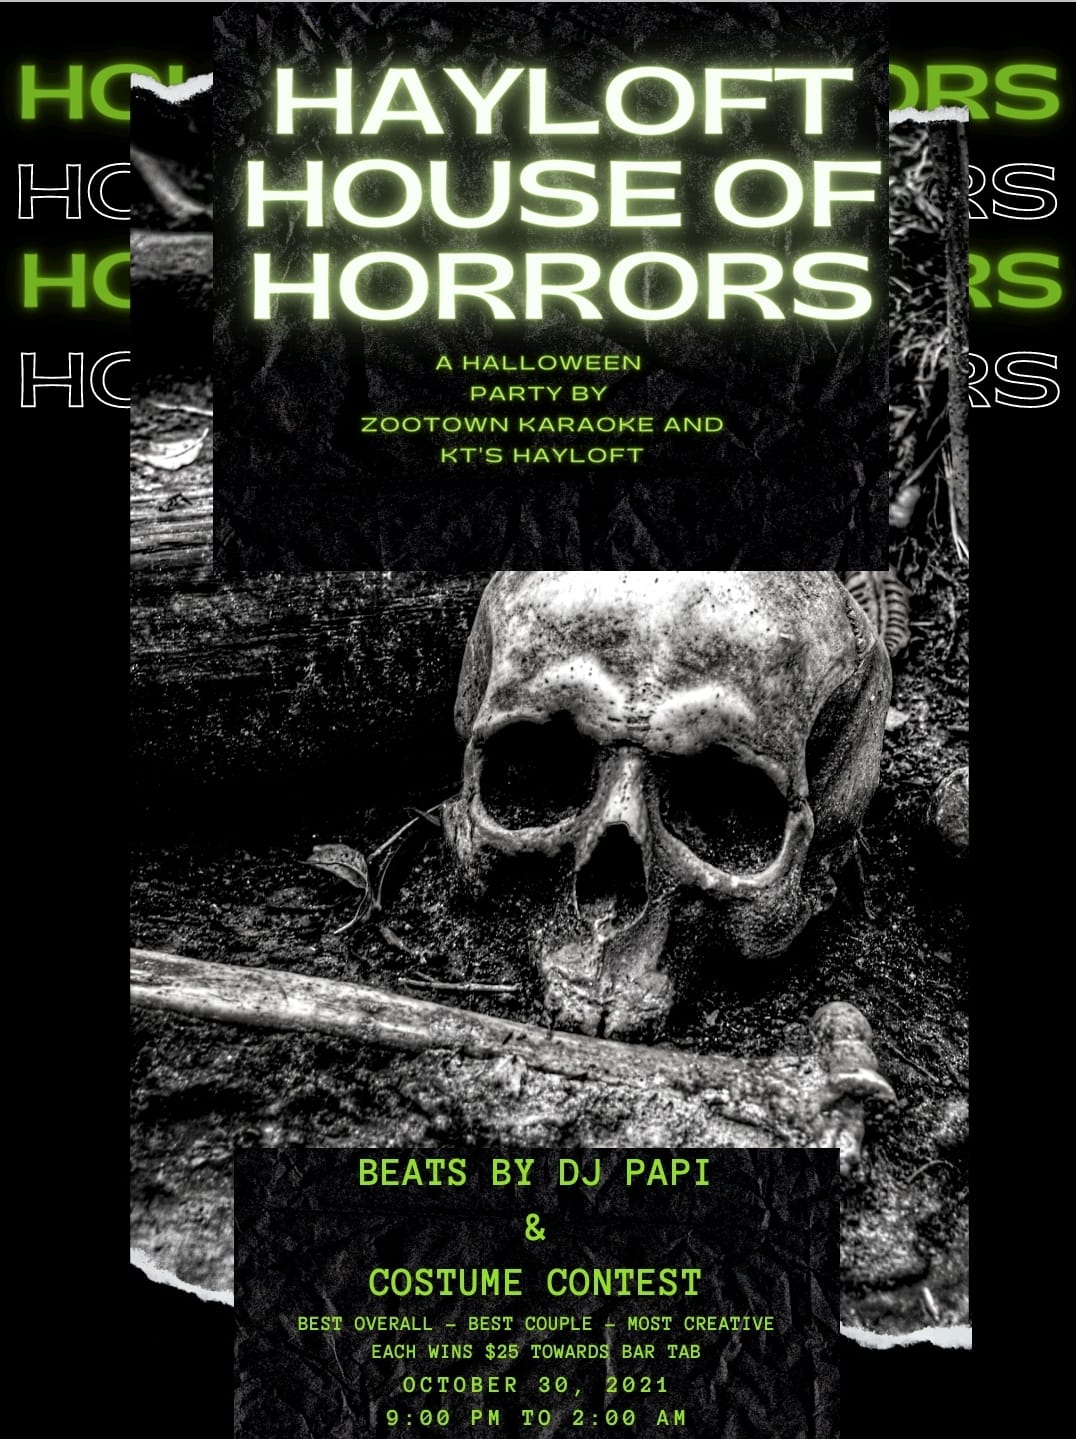 Hayloft House of Horrors